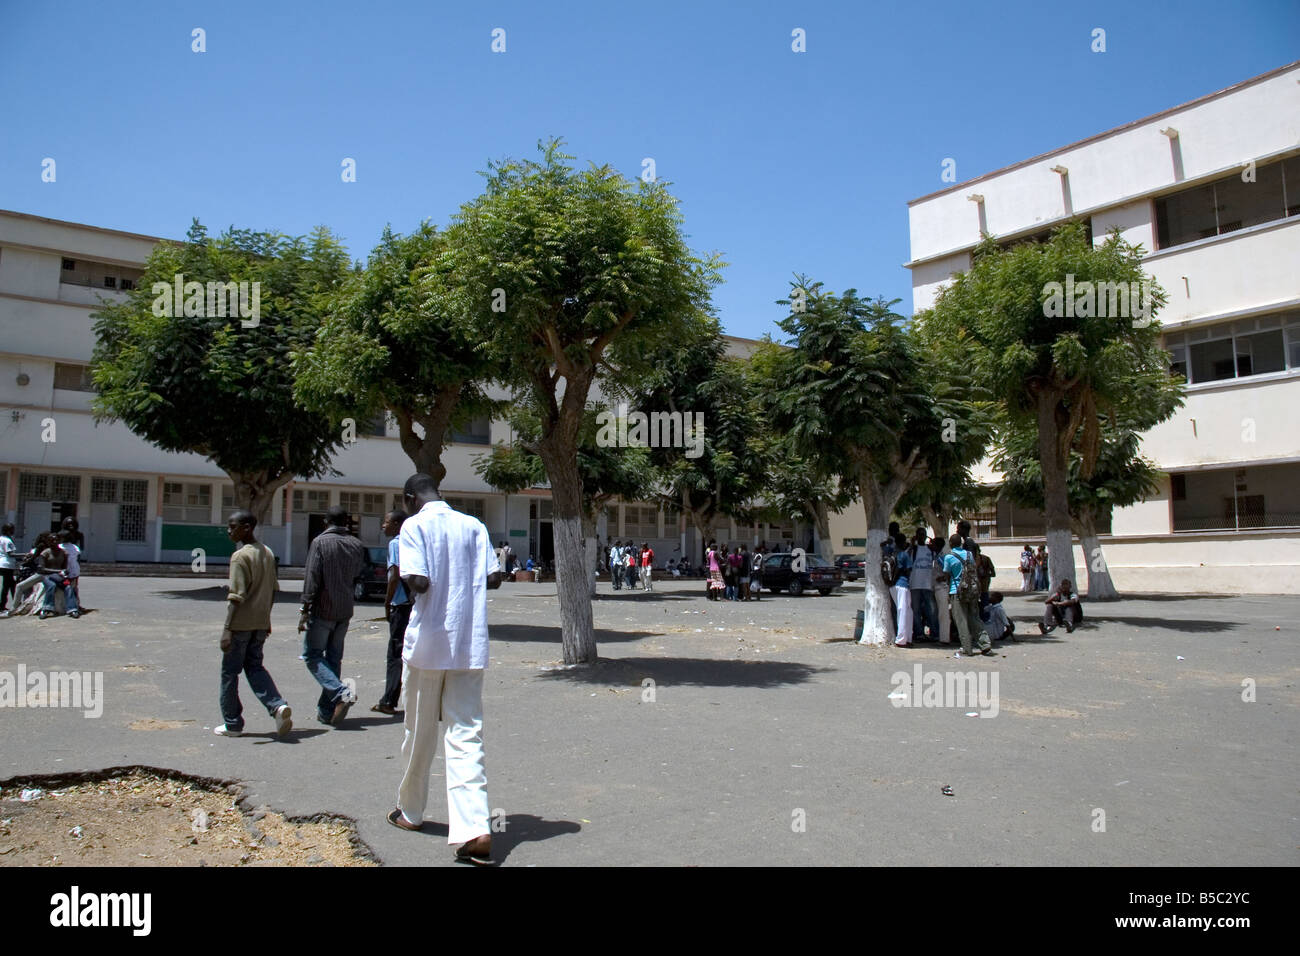 Lycée Lamine Gueye High School Dakar Senegal Stock Photo